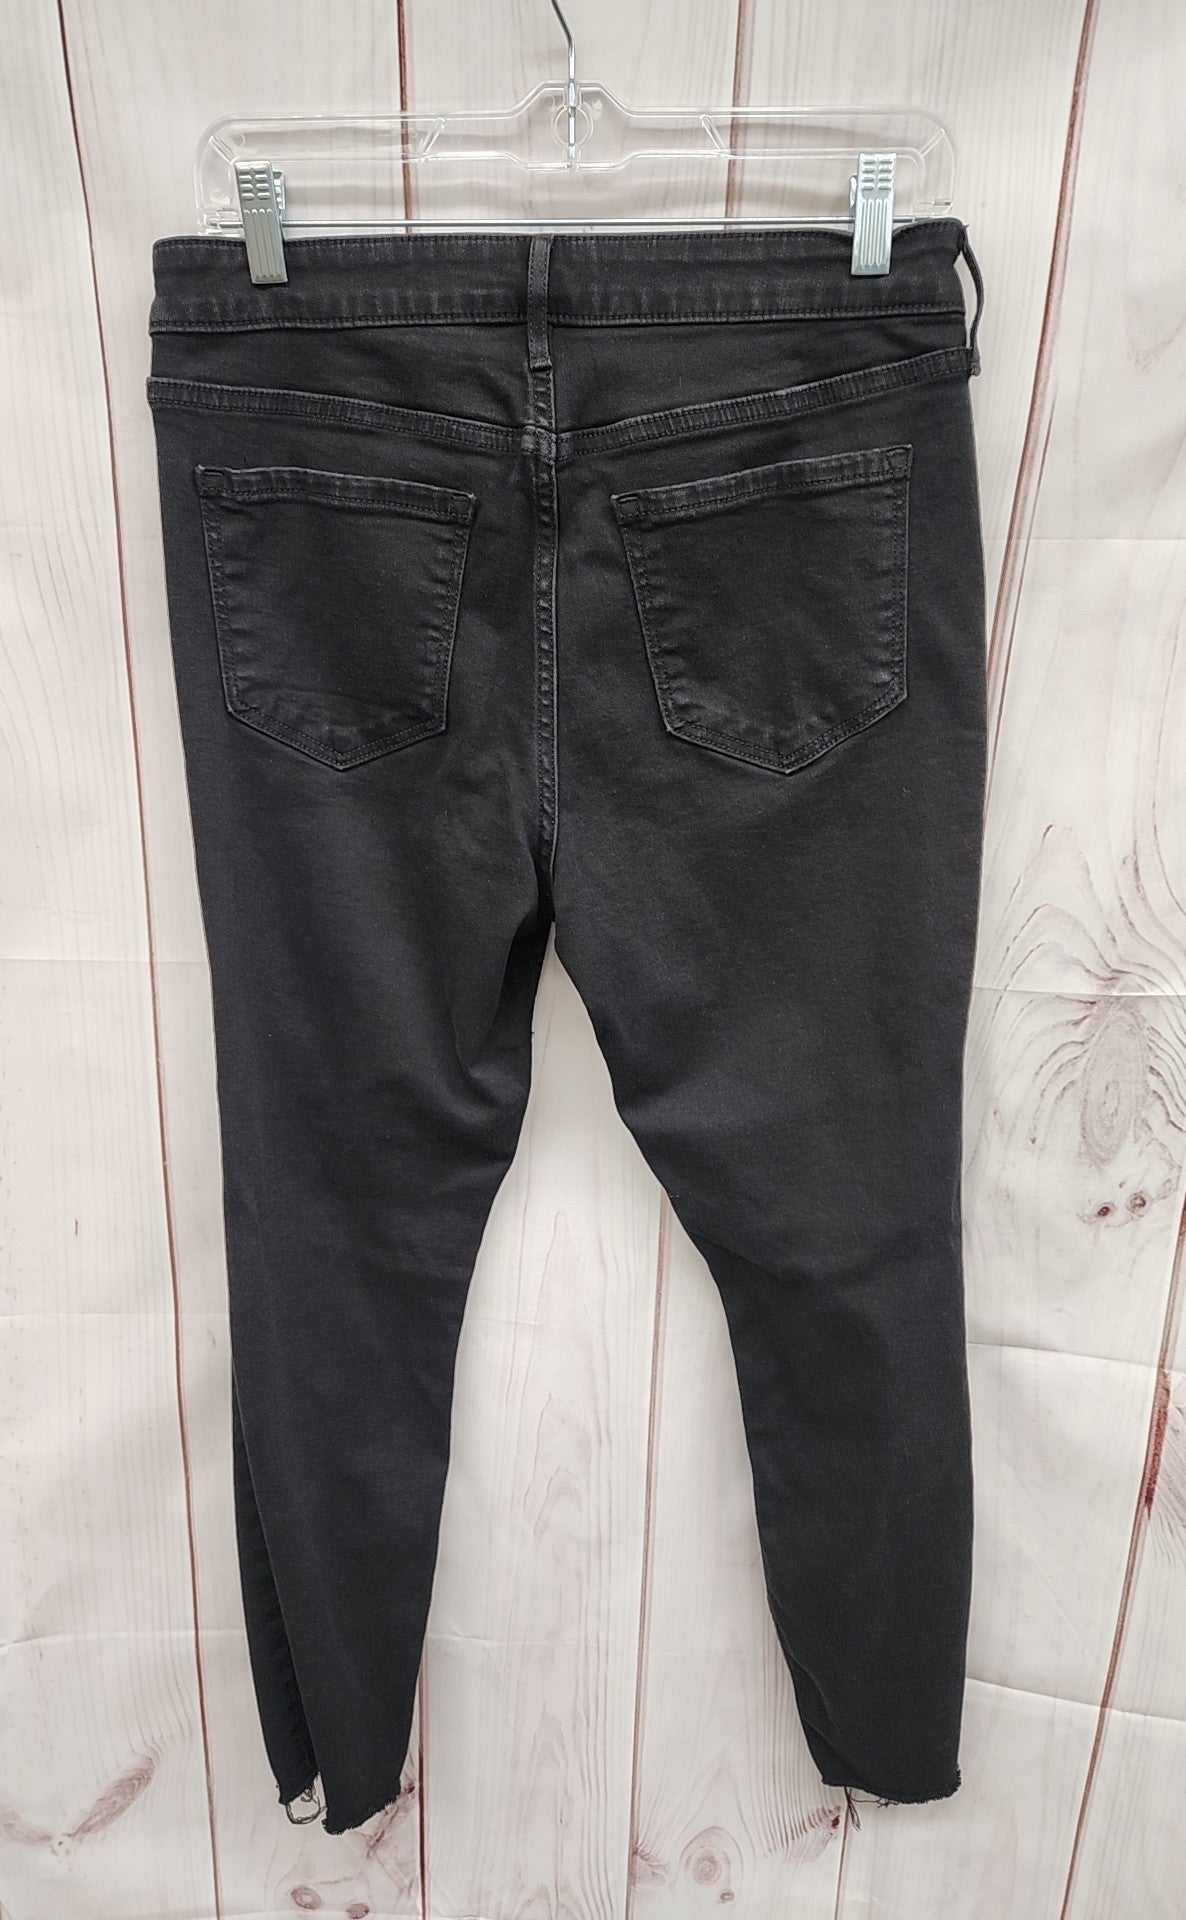 Old Navy Women's Size 30 (9-10) Black Jeans